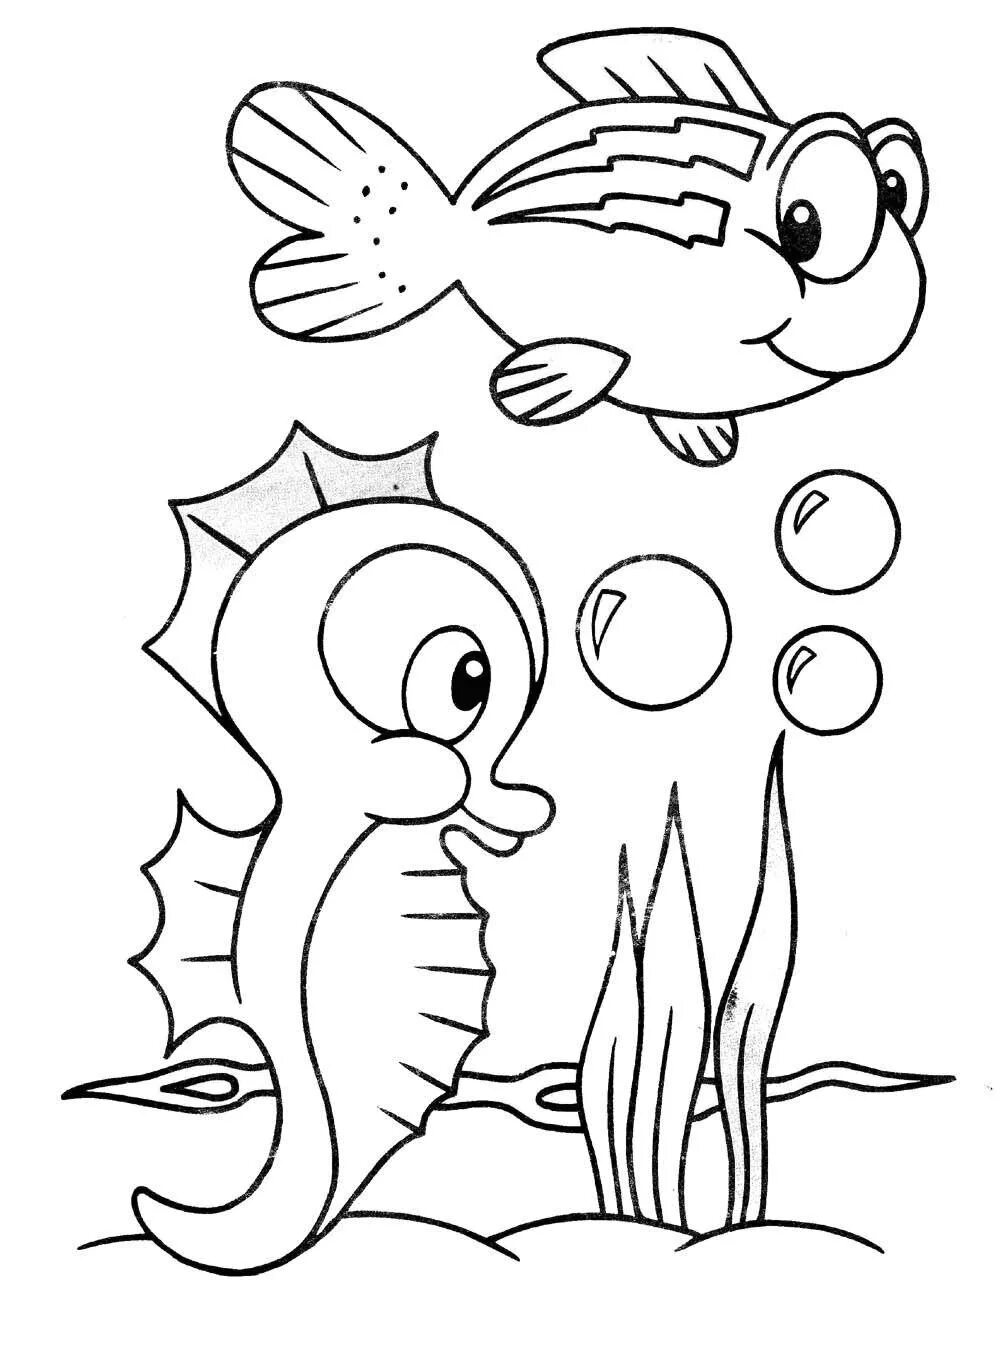 Раскраски рыбки для детей 3 4 лет. Раскраска рыбка. Морские обитатели раскраска для детей. Рыбка раскраска для детей. Морские рыбки раскраска для детей.